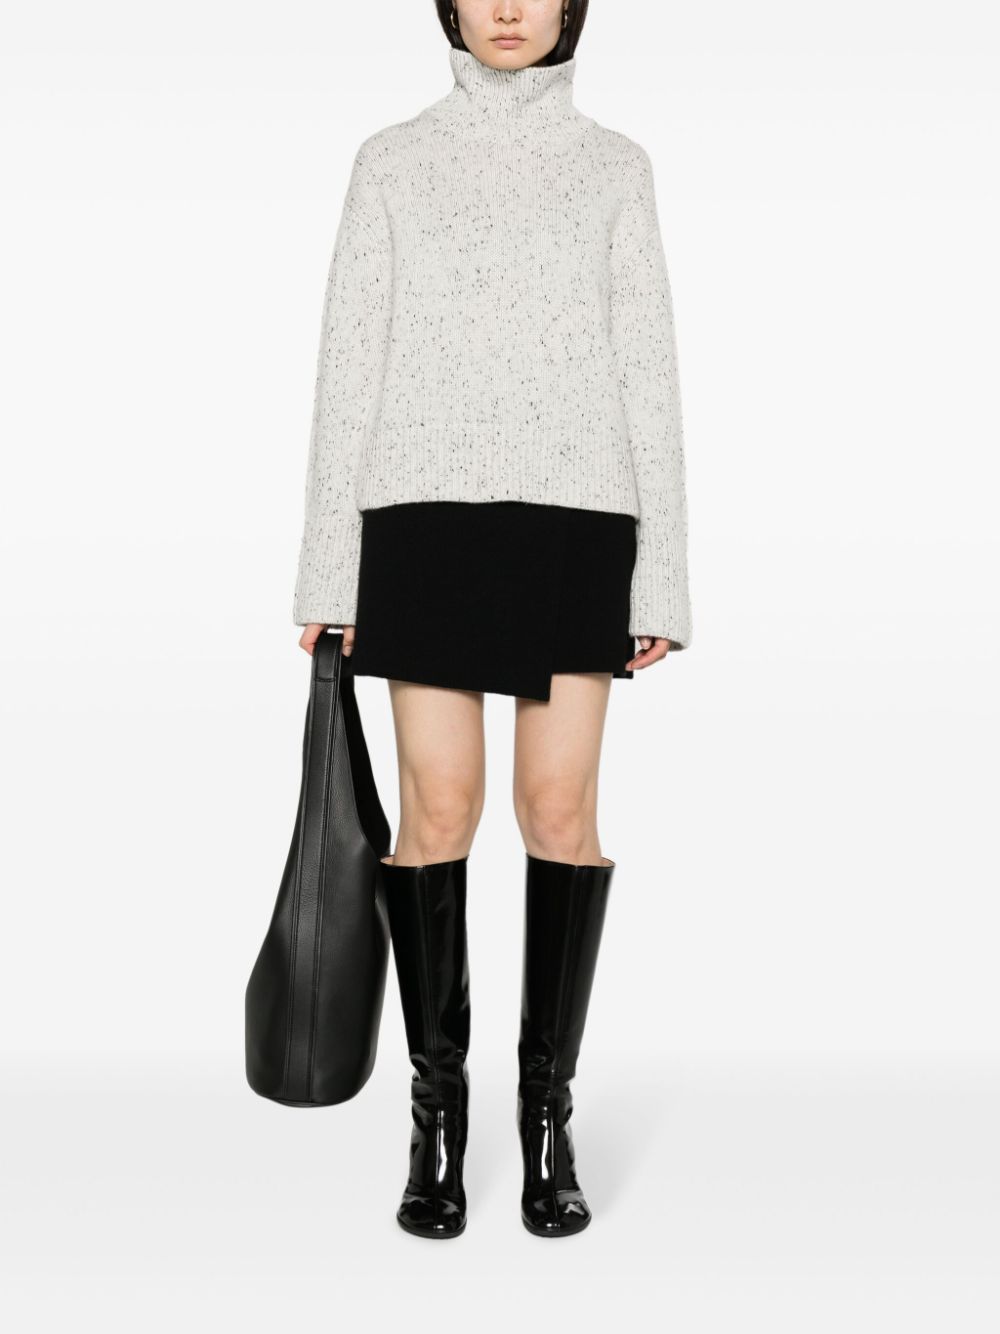 Lisa Yang LISA YANG- The Fleur Cashmere Sweater